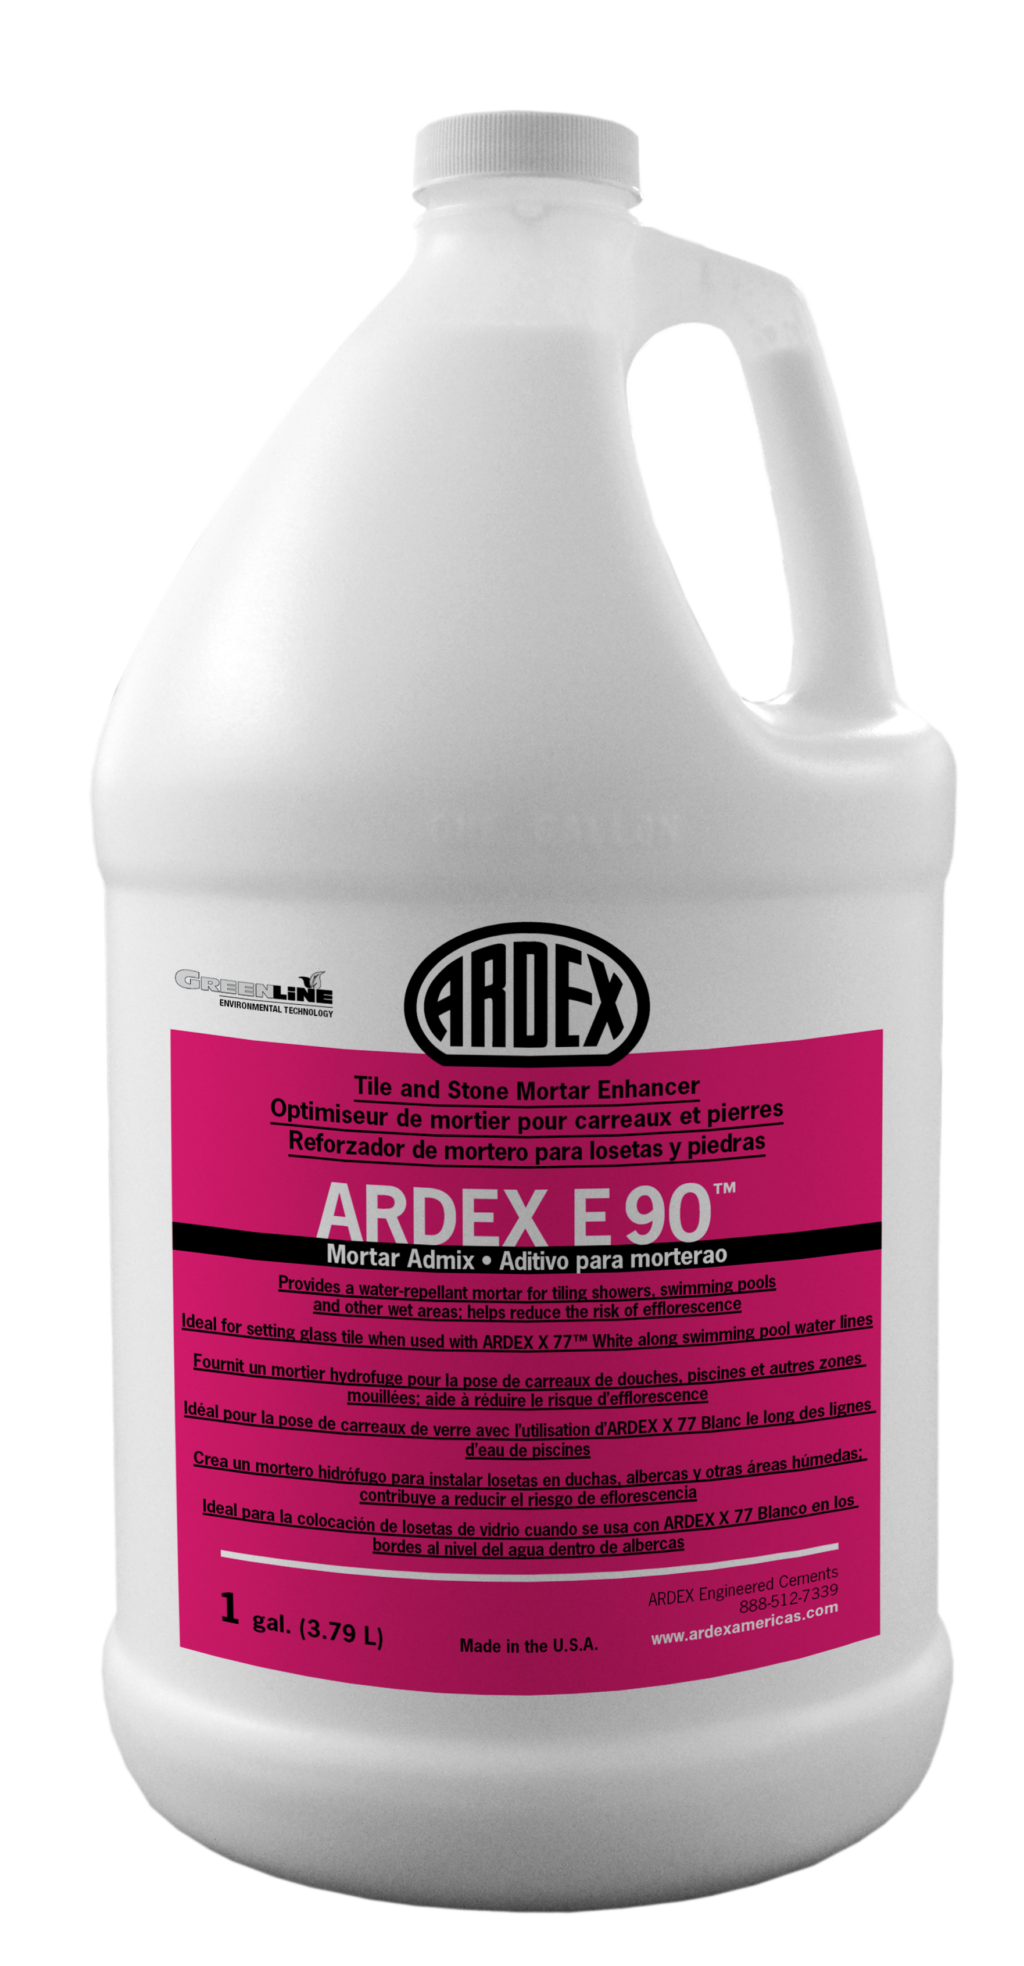 Ardex Tile and Stone Mortar Enhancer- Mortar Admix- E 90™ | Lint Tile